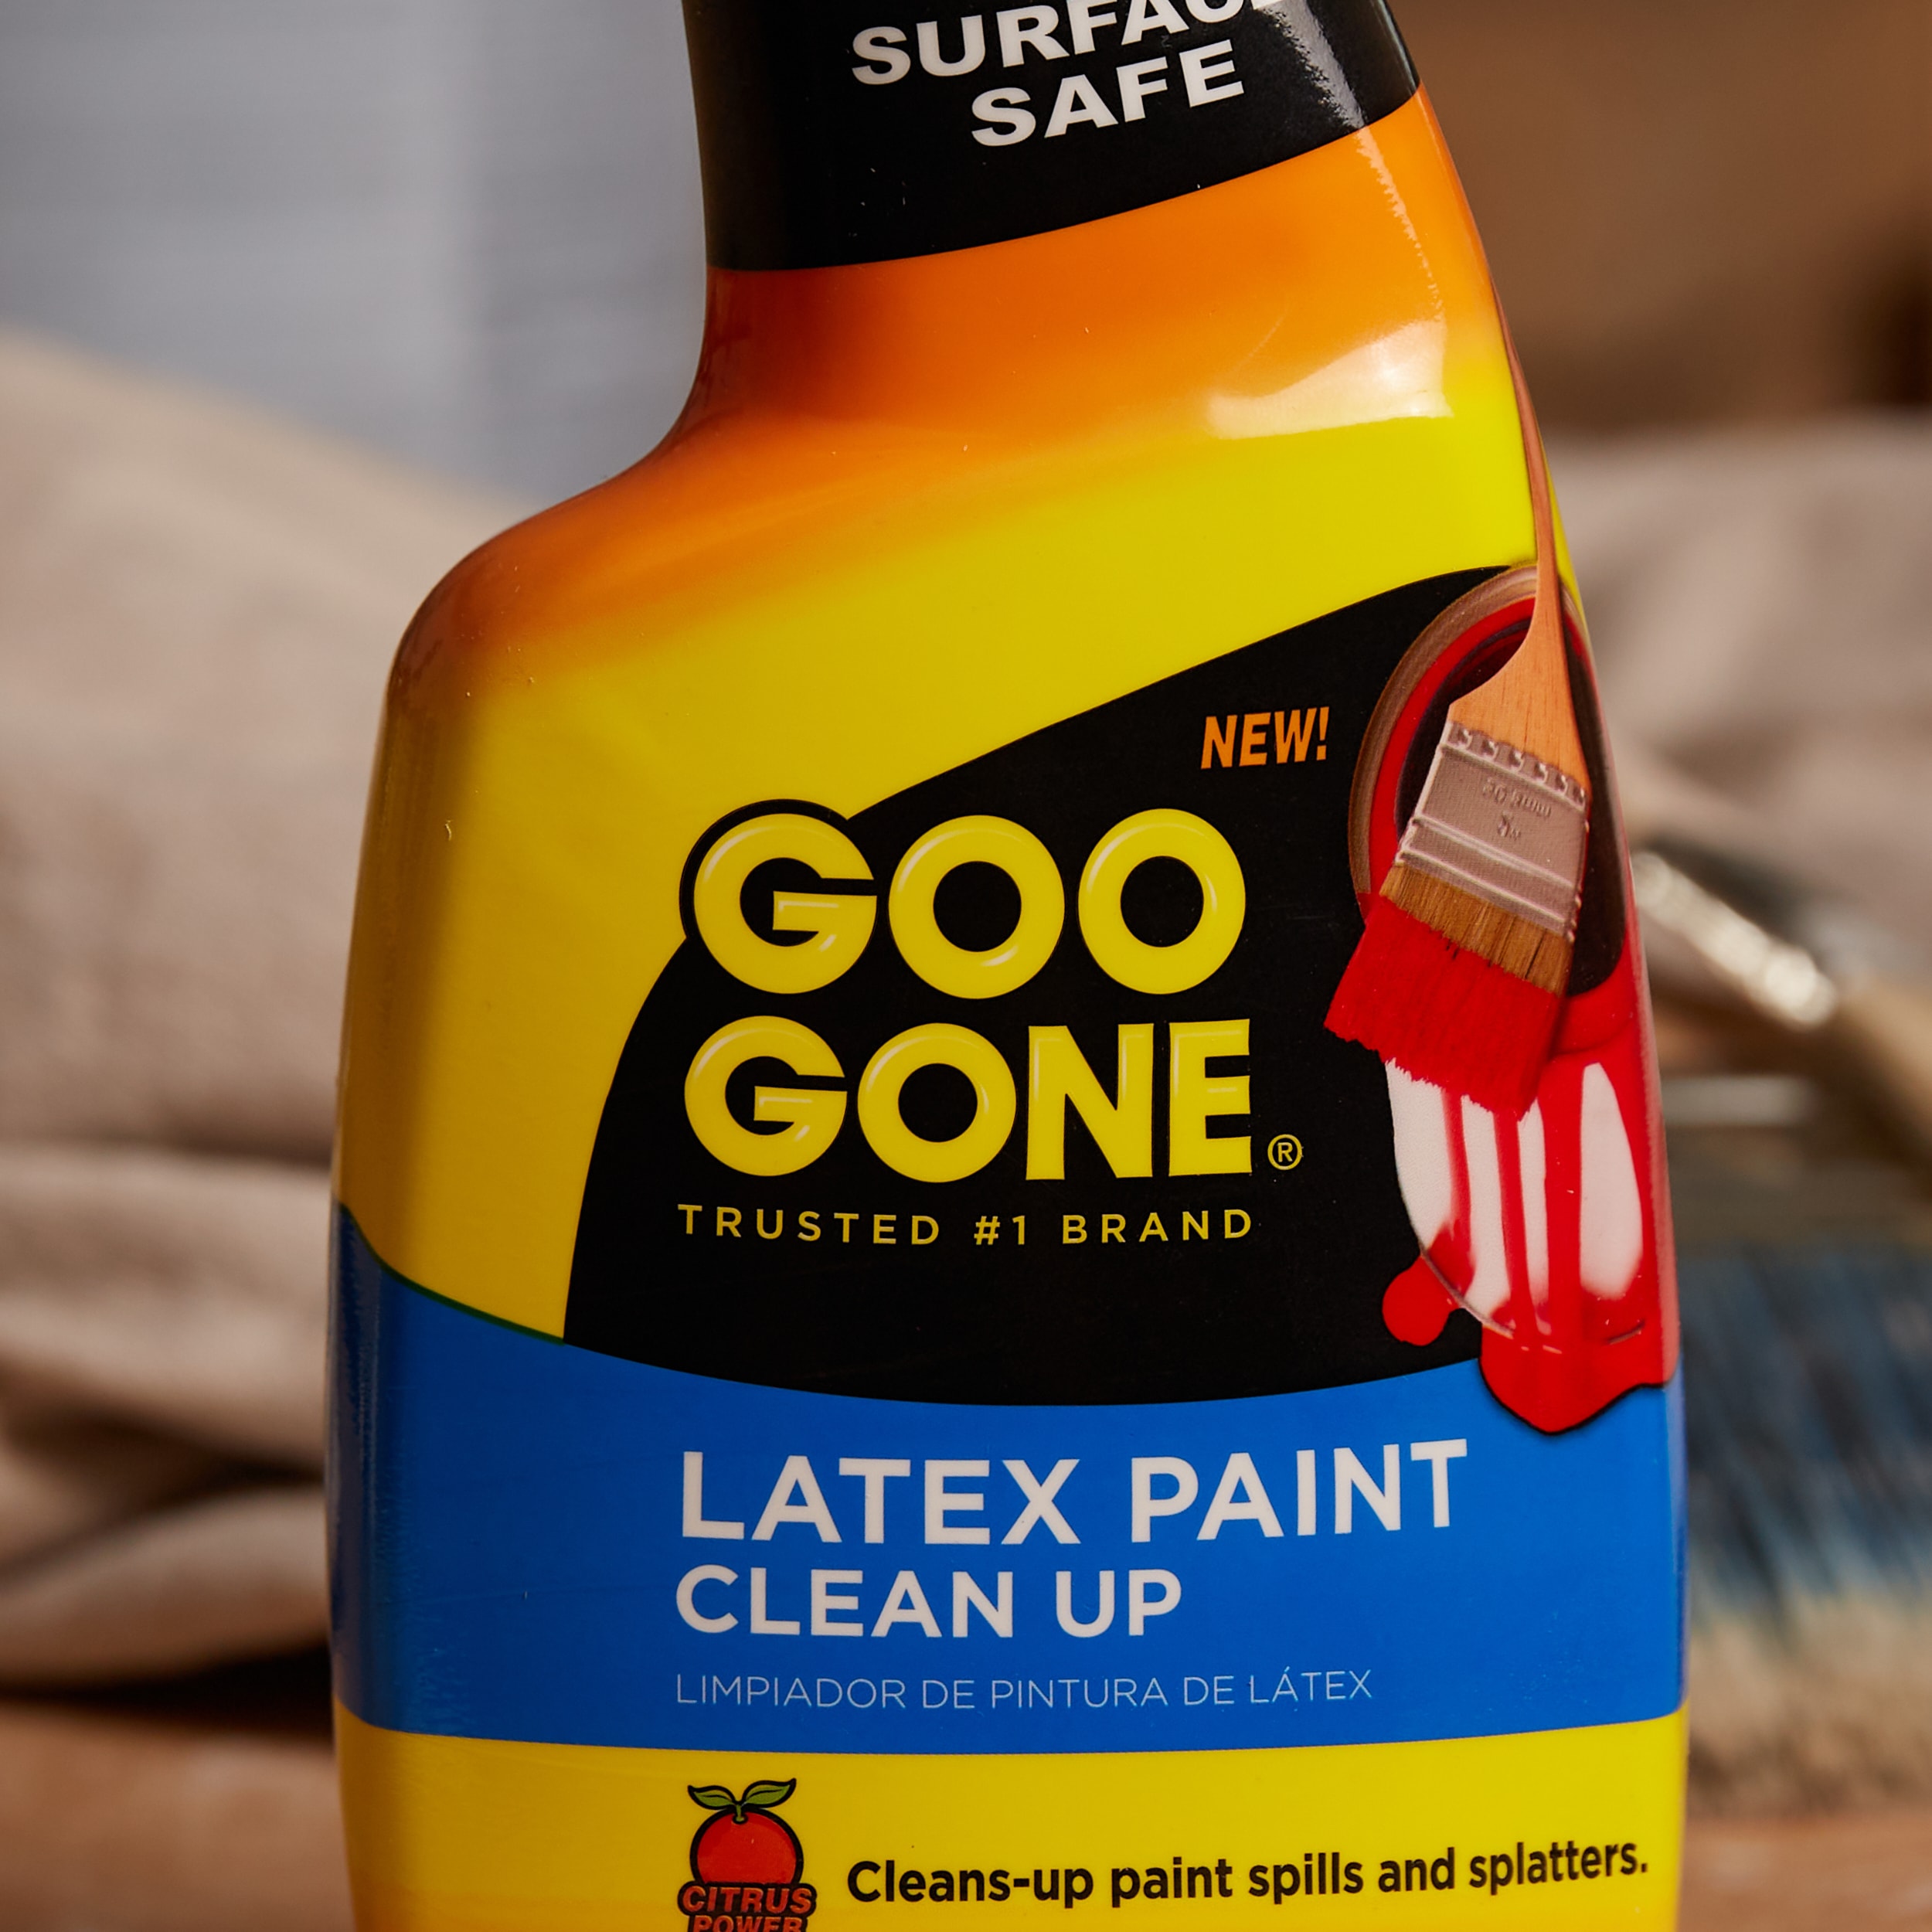  Goo Gone Clean Up Wipes, (2 Pack)